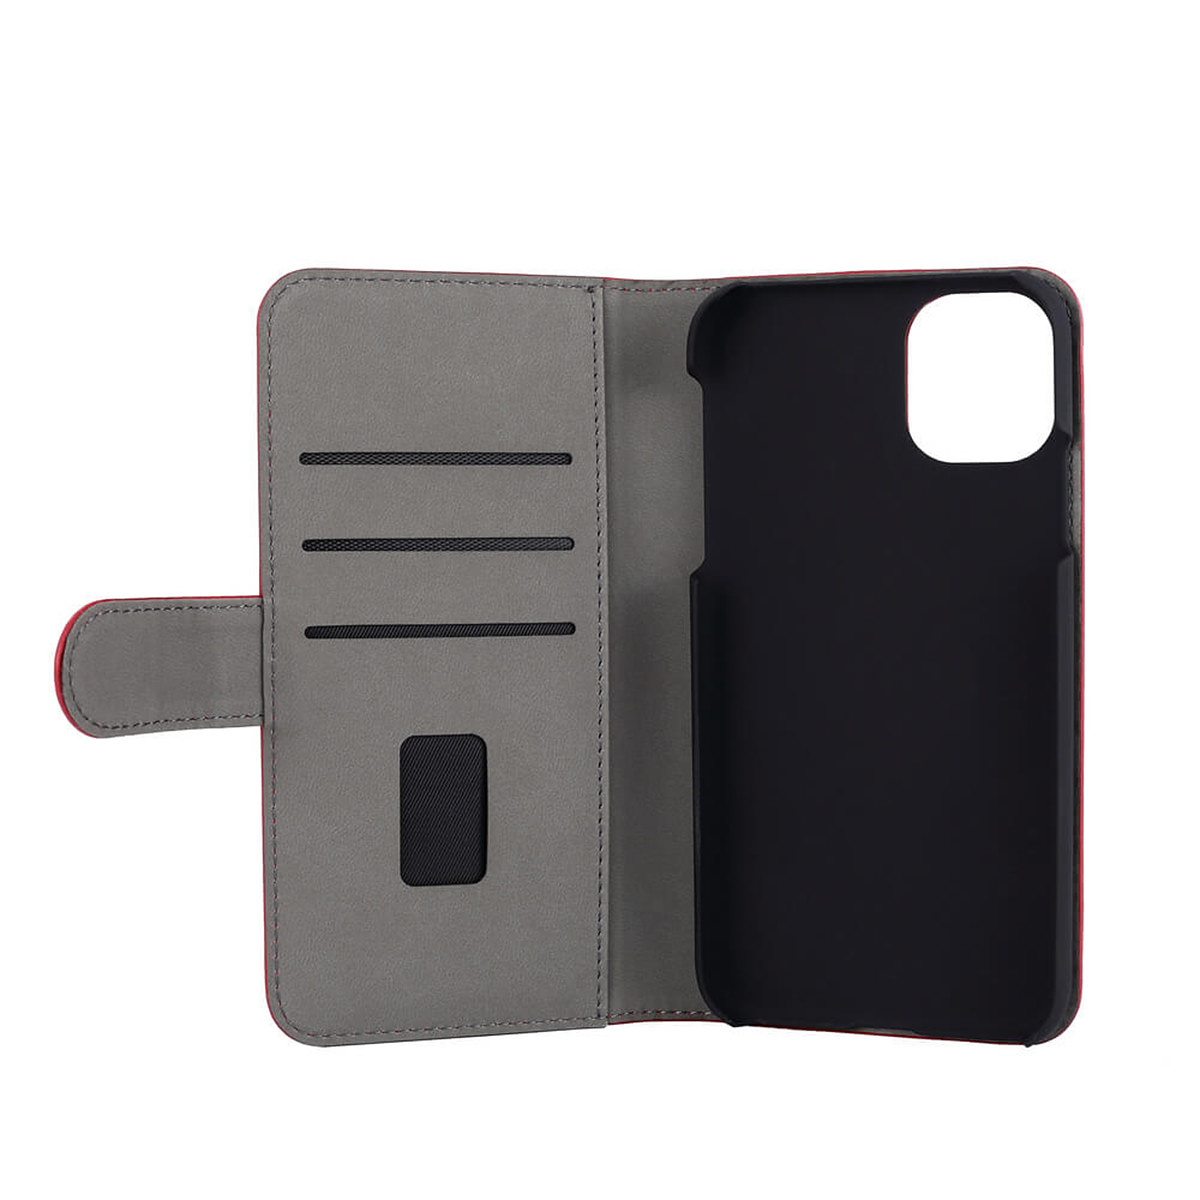 Gear plånboksväska, Limited Edition, iPhone 11, röd